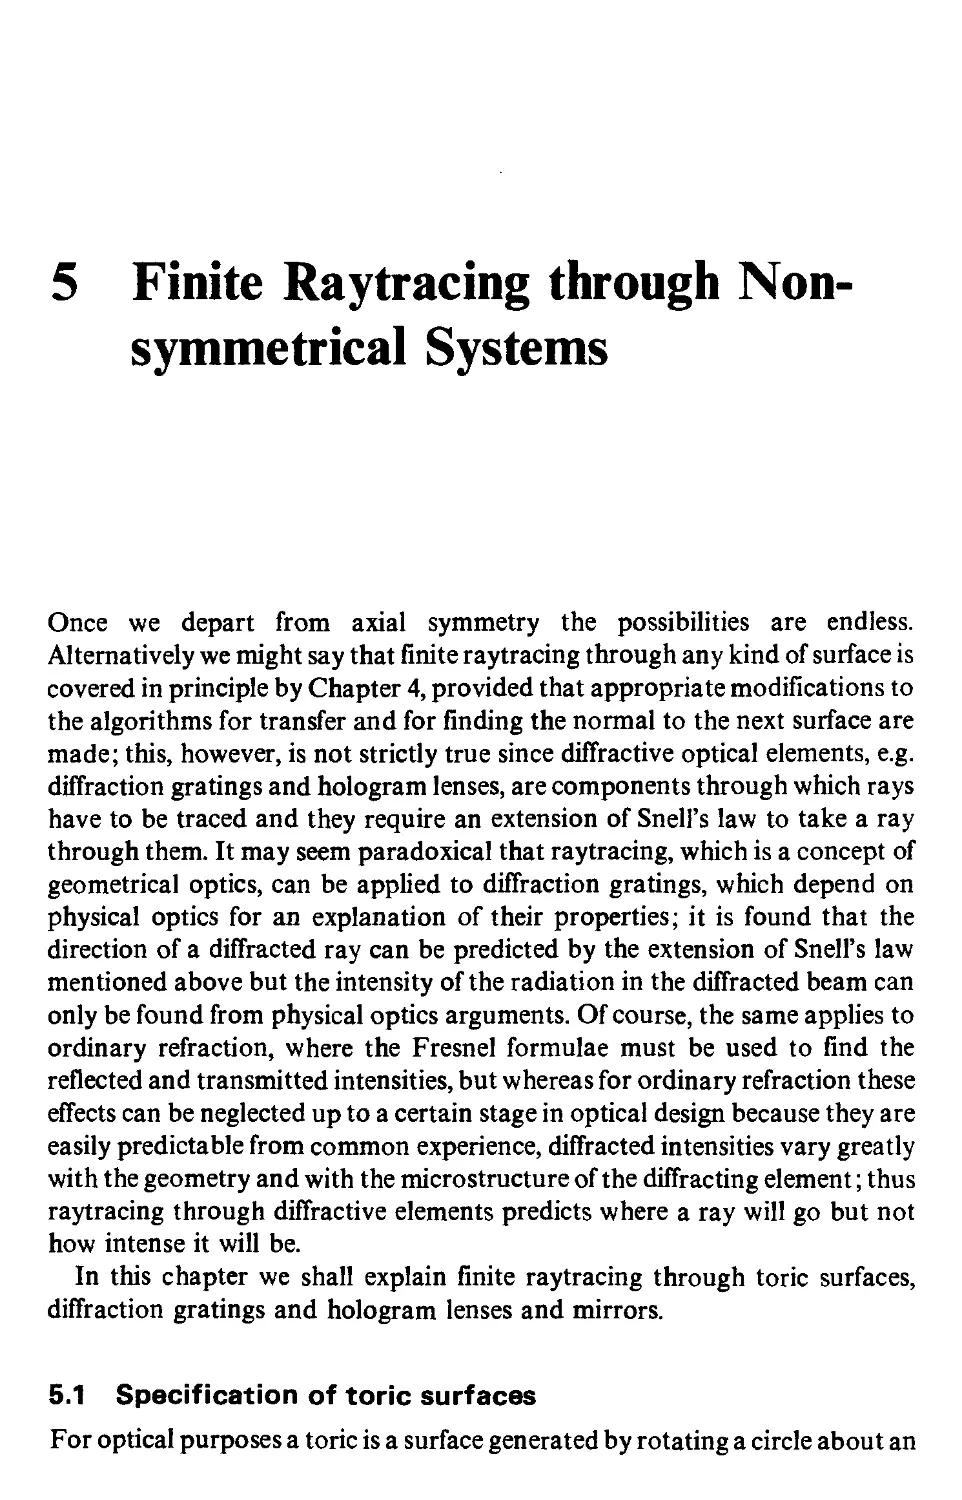 5 Finite raytracing through non-symmetrical systems